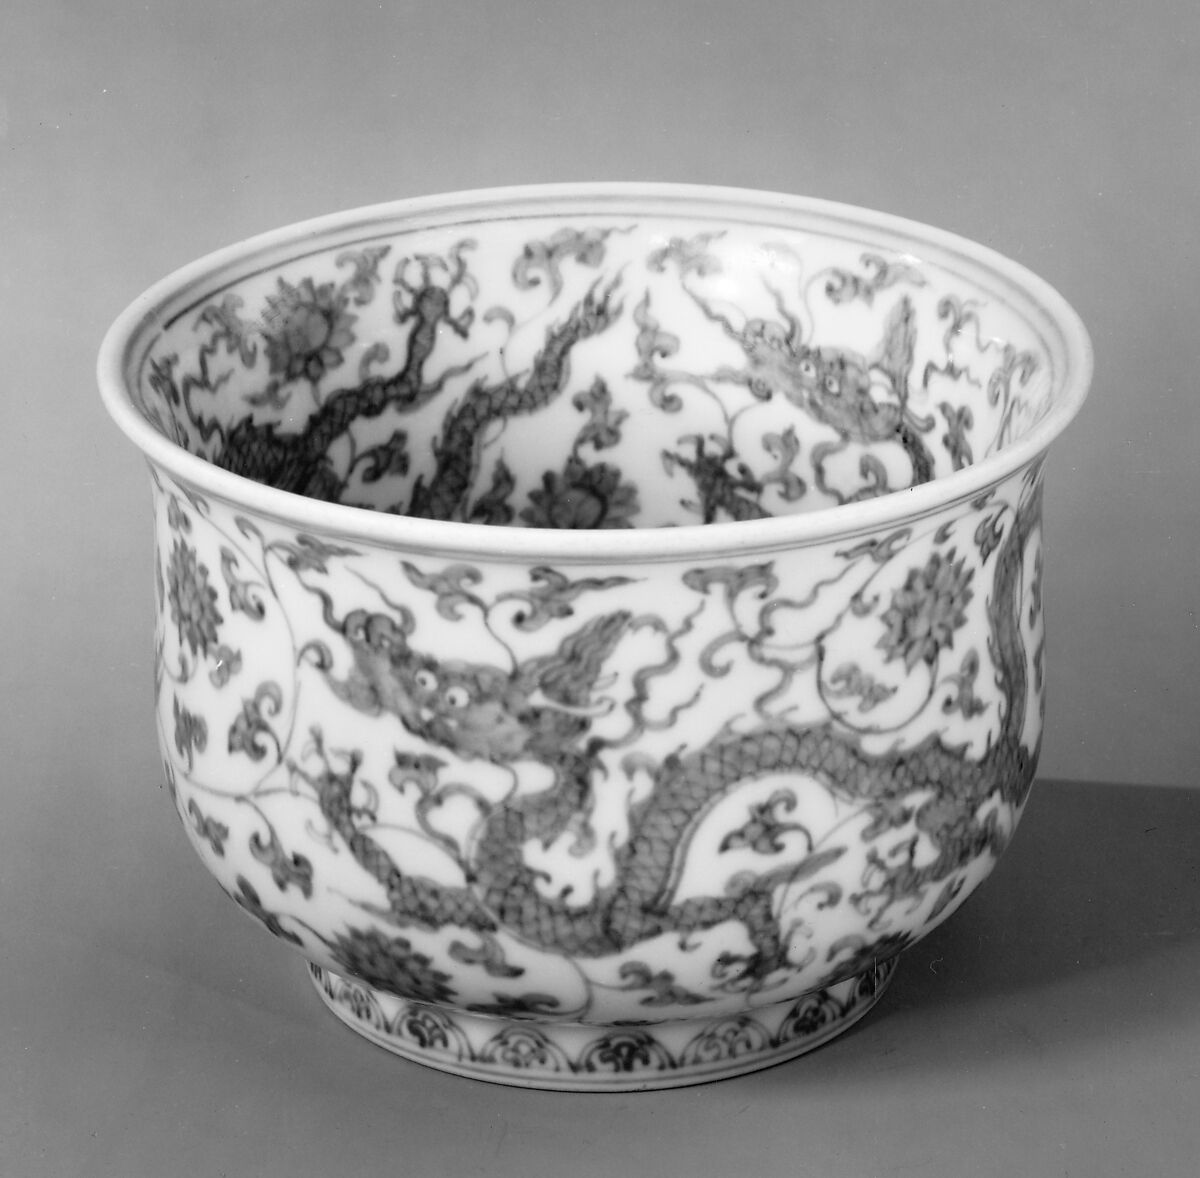 Bowl with Dragons, Porcelain painted with cobalt blue under transparent glaze (Jingdezhen ware), China 